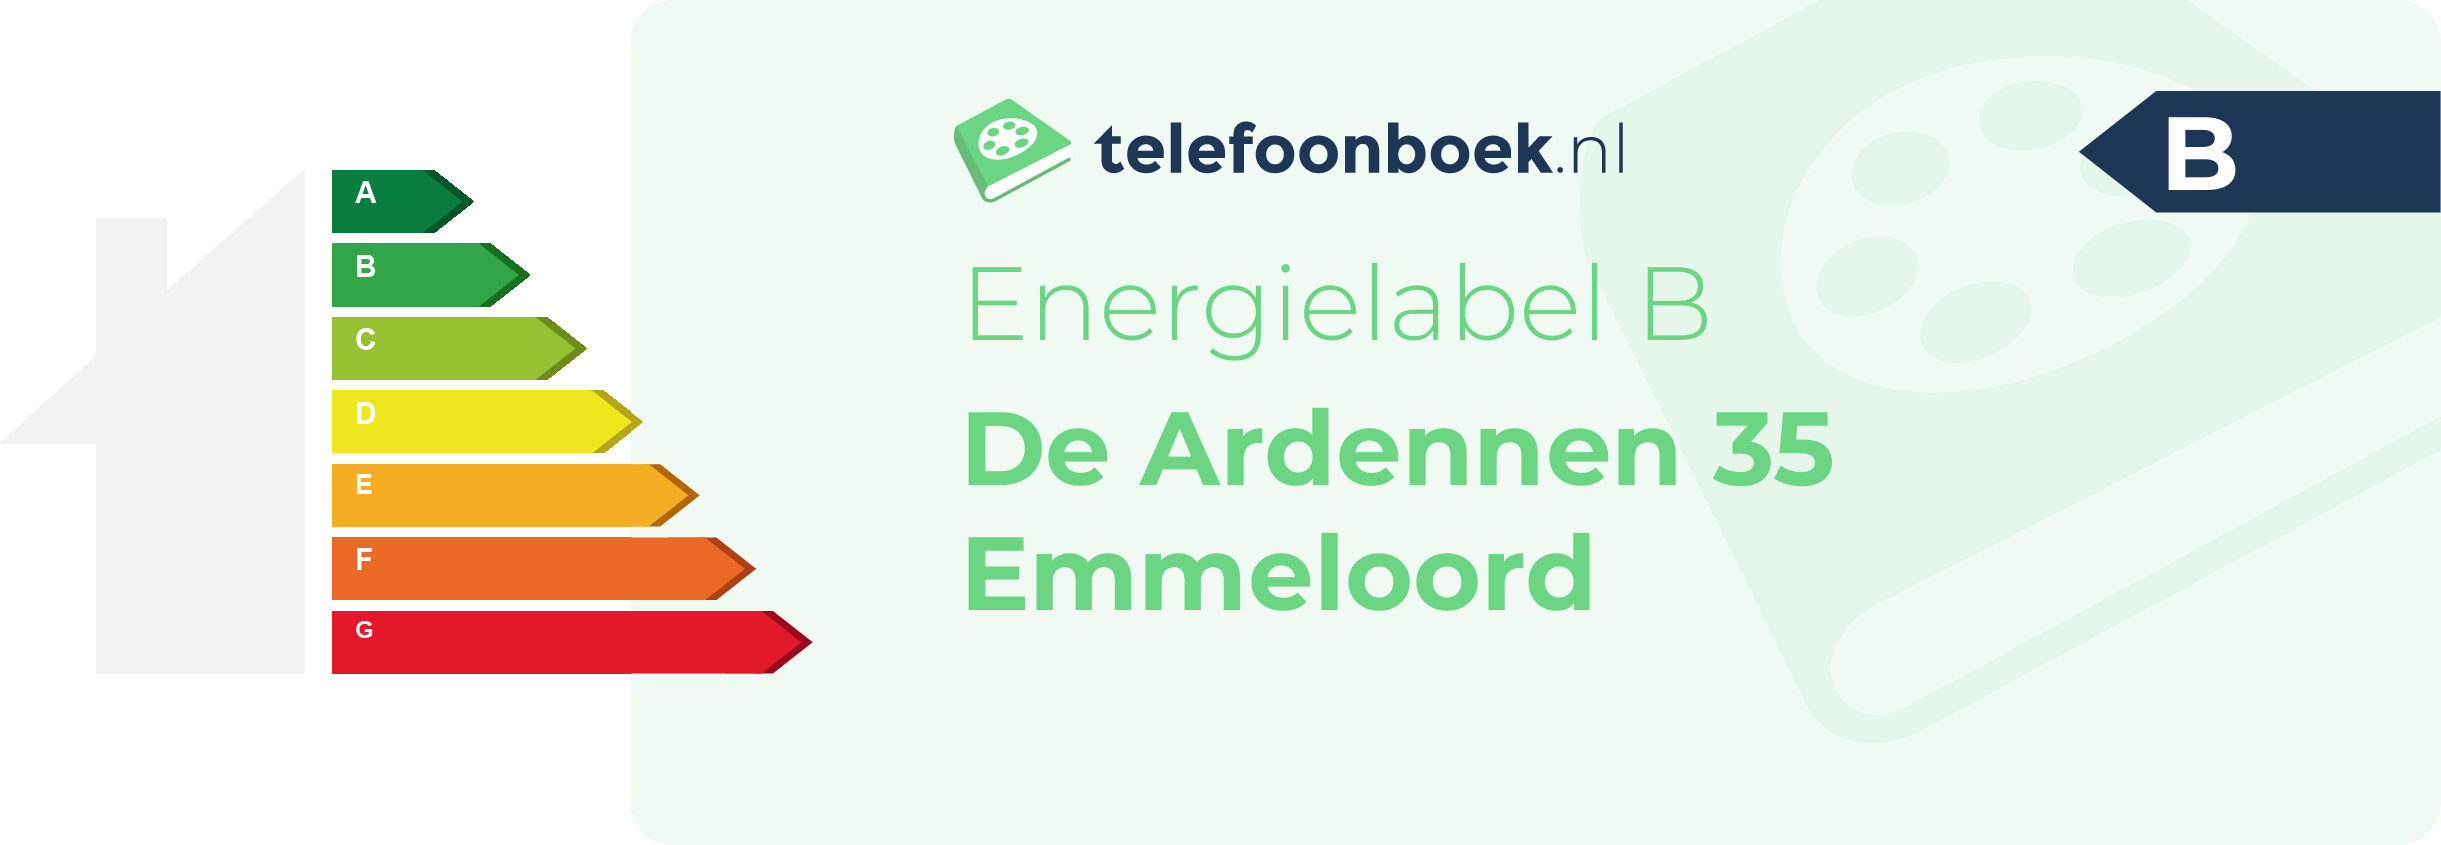 Energielabel De Ardennen 35 Emmeloord